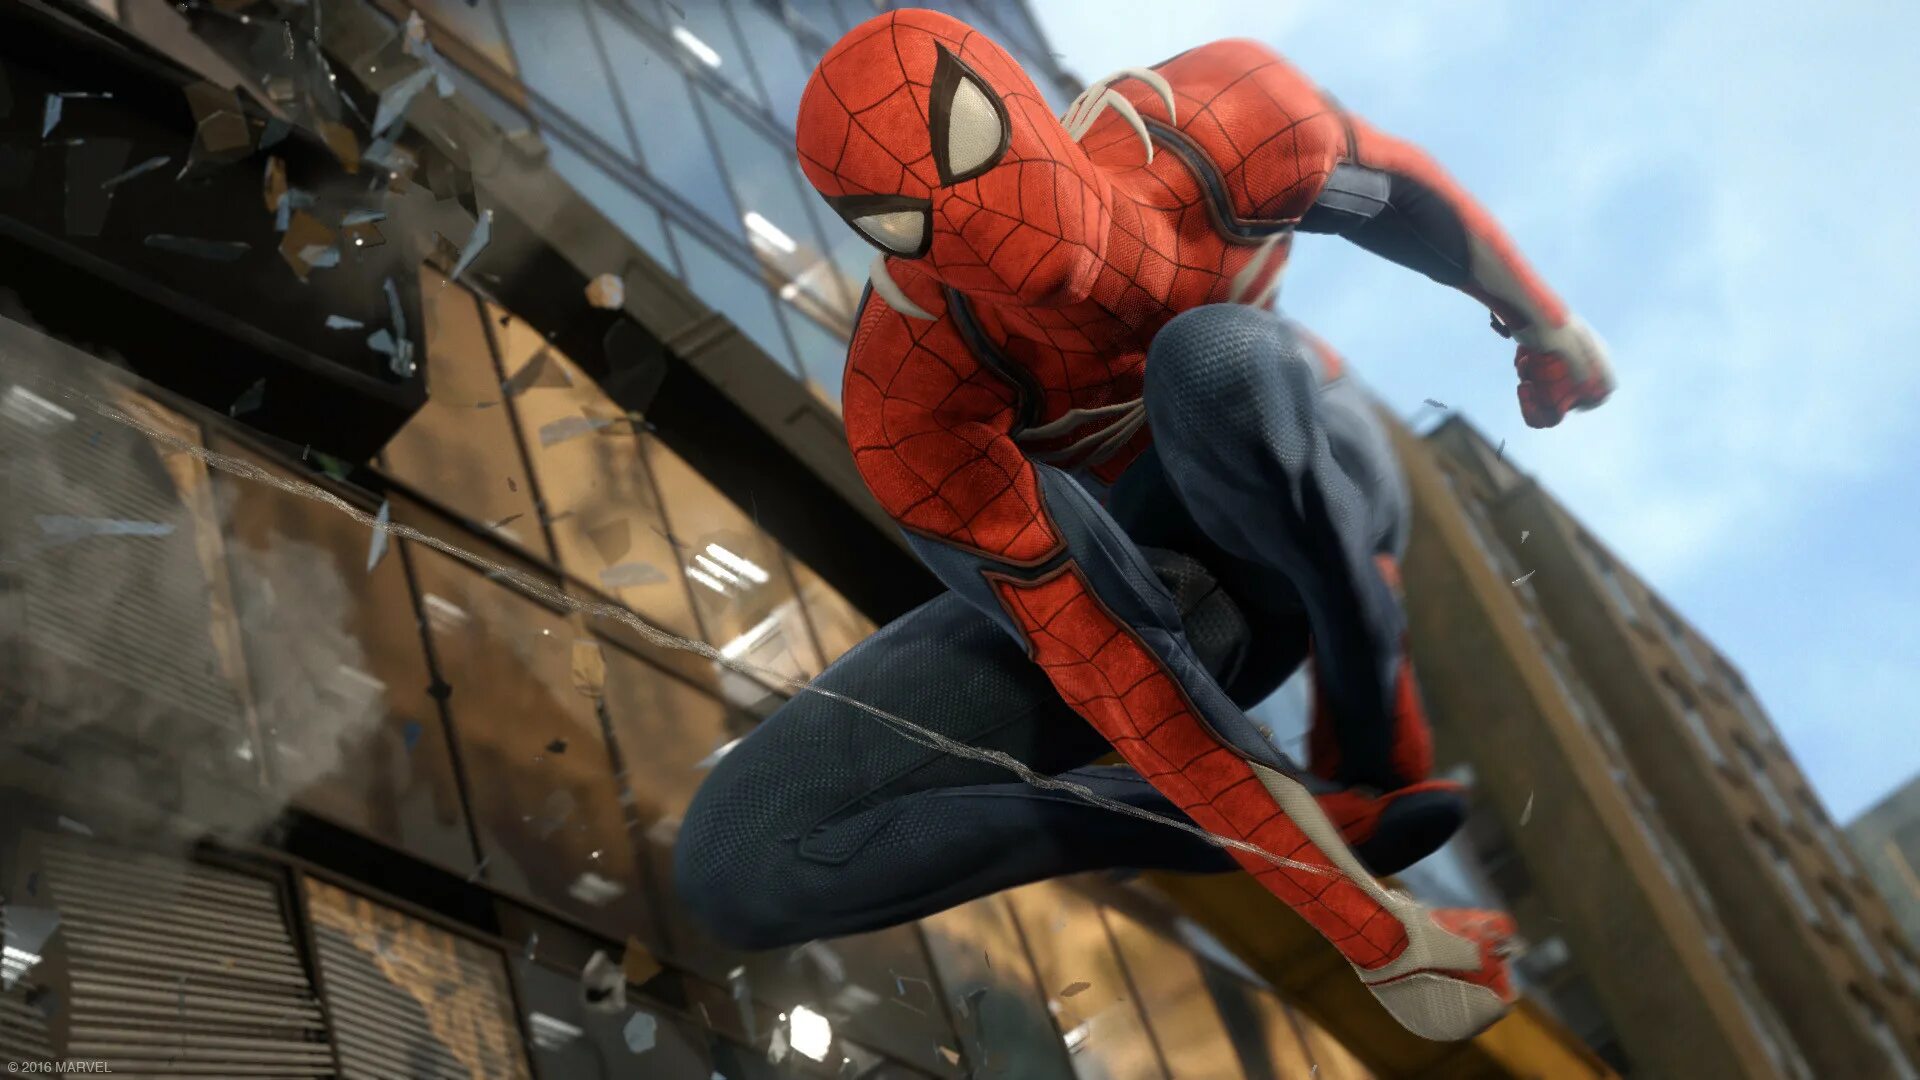 Spider man ps4. Marvel Spider man игра 2018. Марвел человек паук игра на ps4. Марвел человек паук пс4.